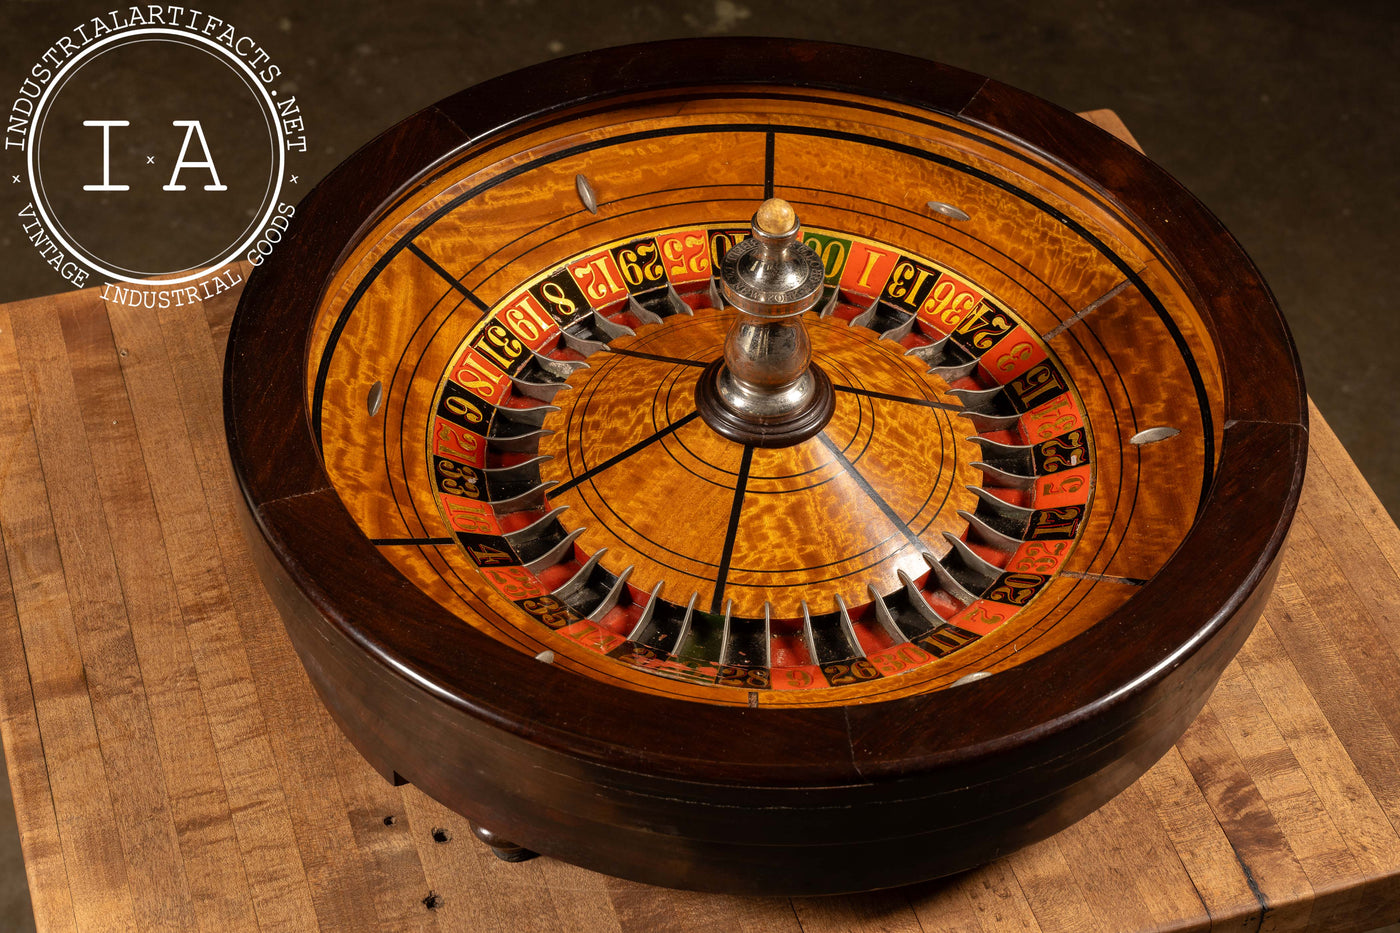 Antique Traveling Roulette Wheel